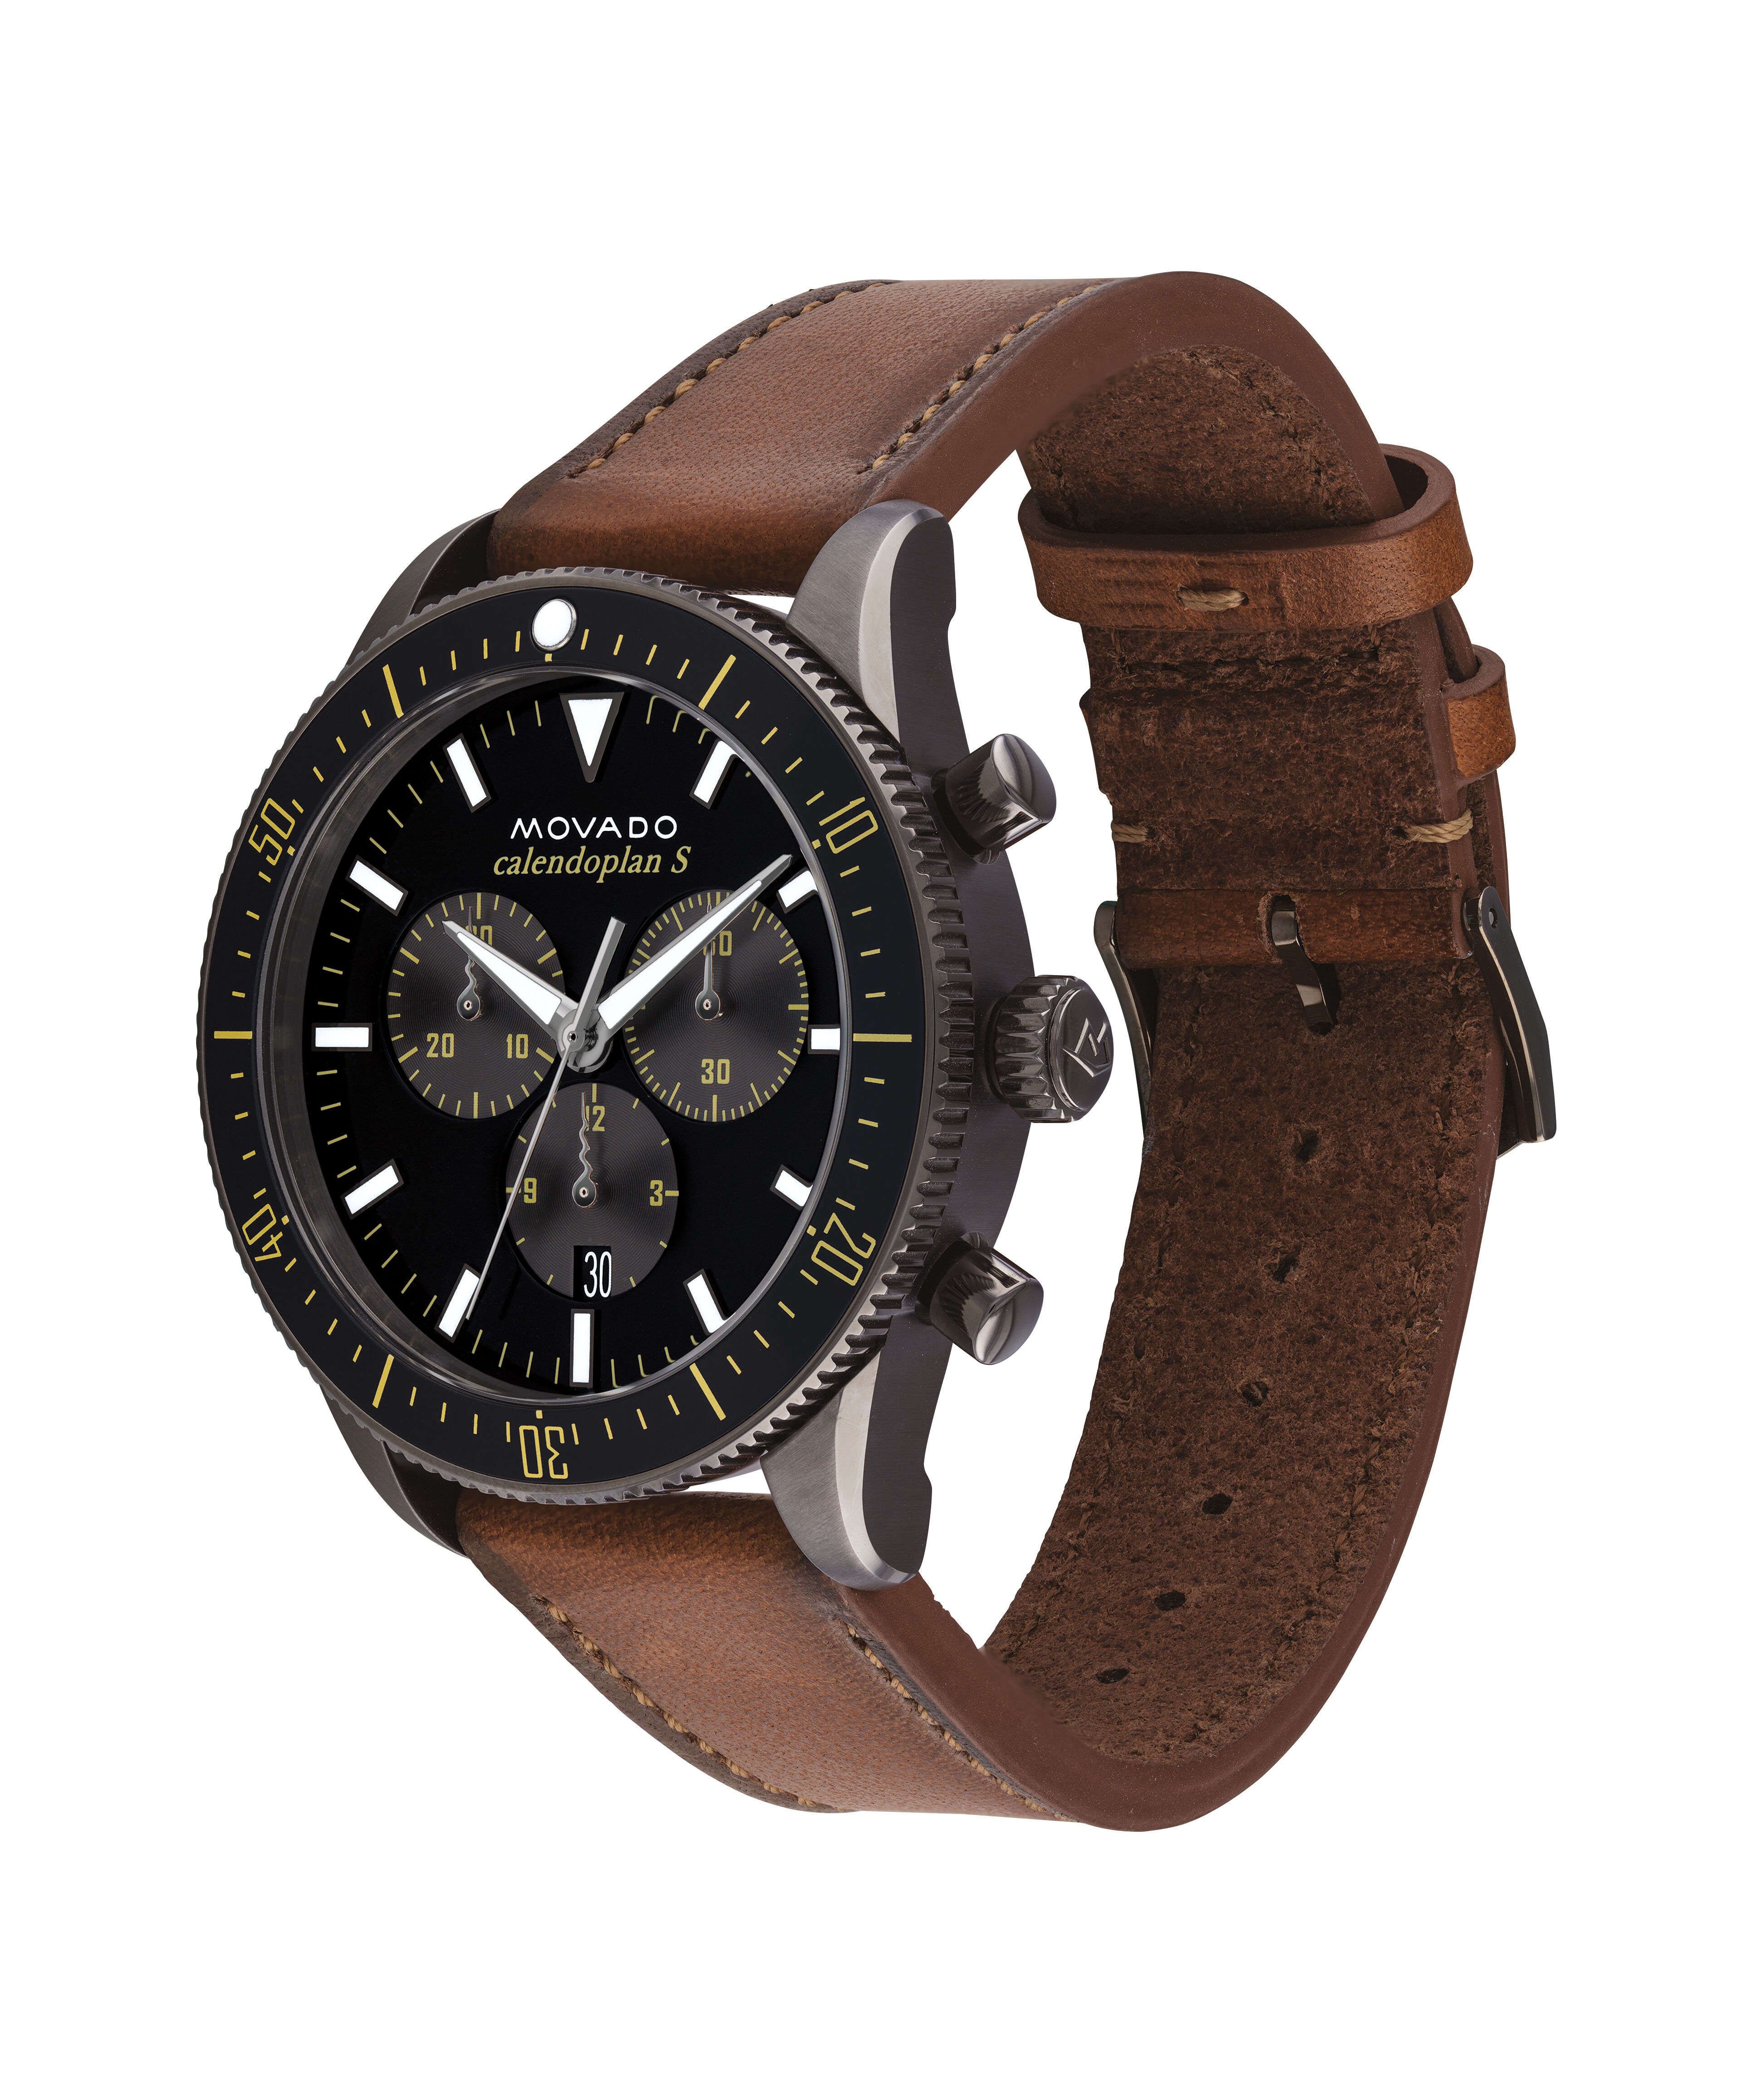 Movado Men's Movado Series 800 Chronograph Watch with Black DialMovado Men's Movado Watch with Black Dial